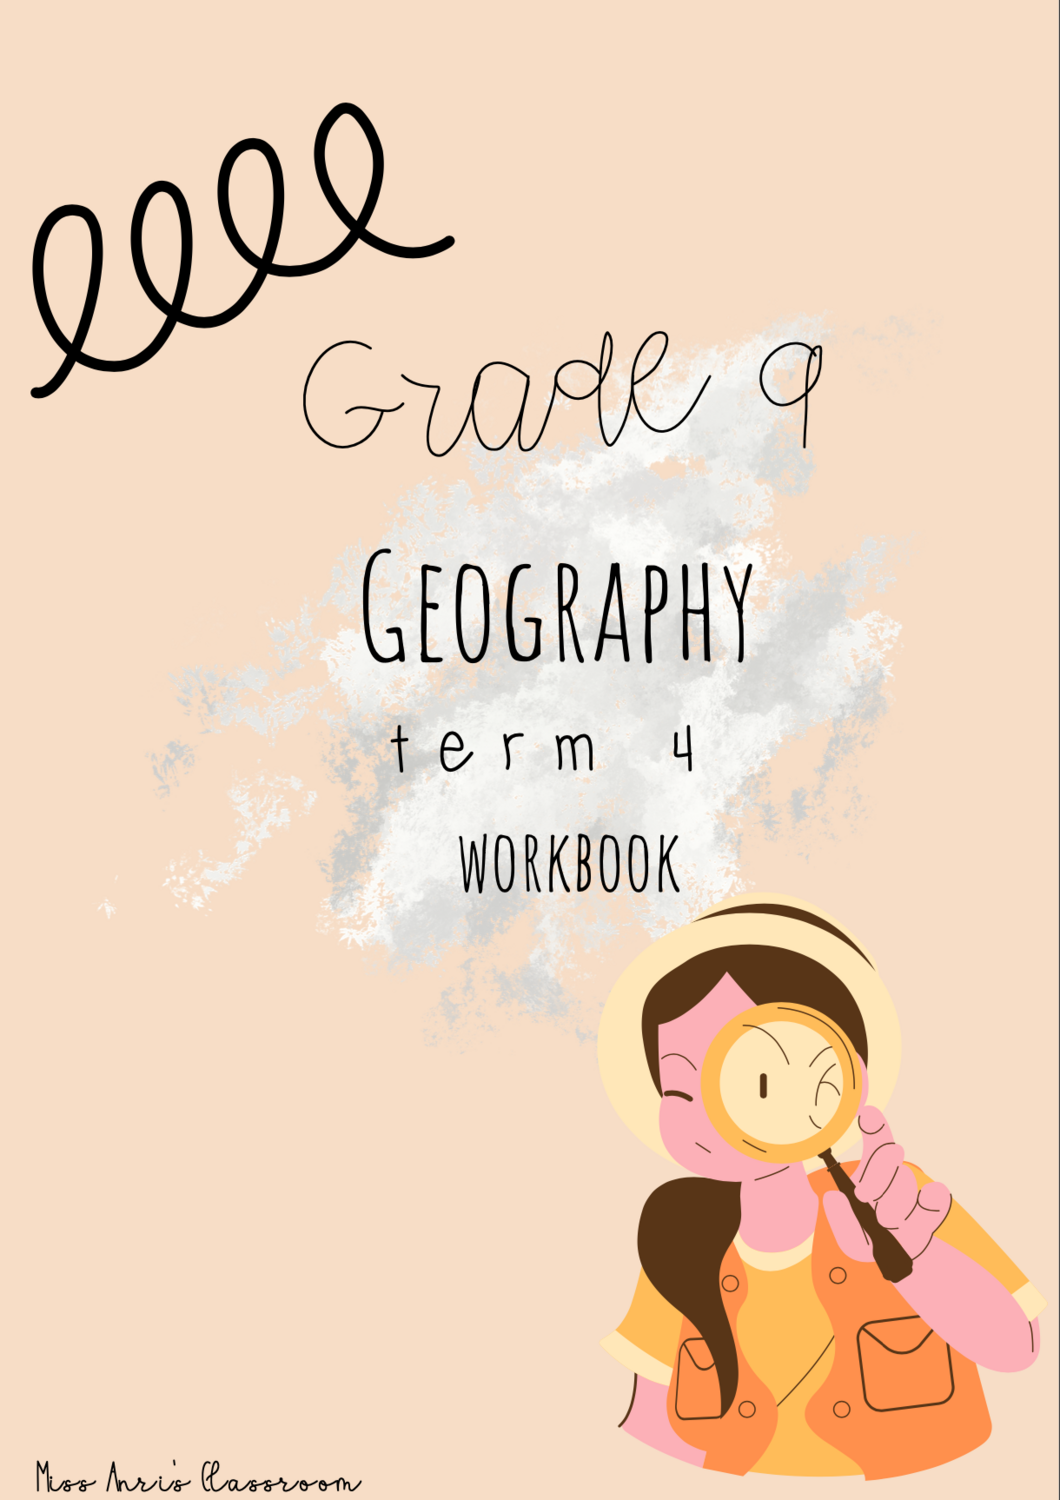 Grade 9 Geography term 4 workbook